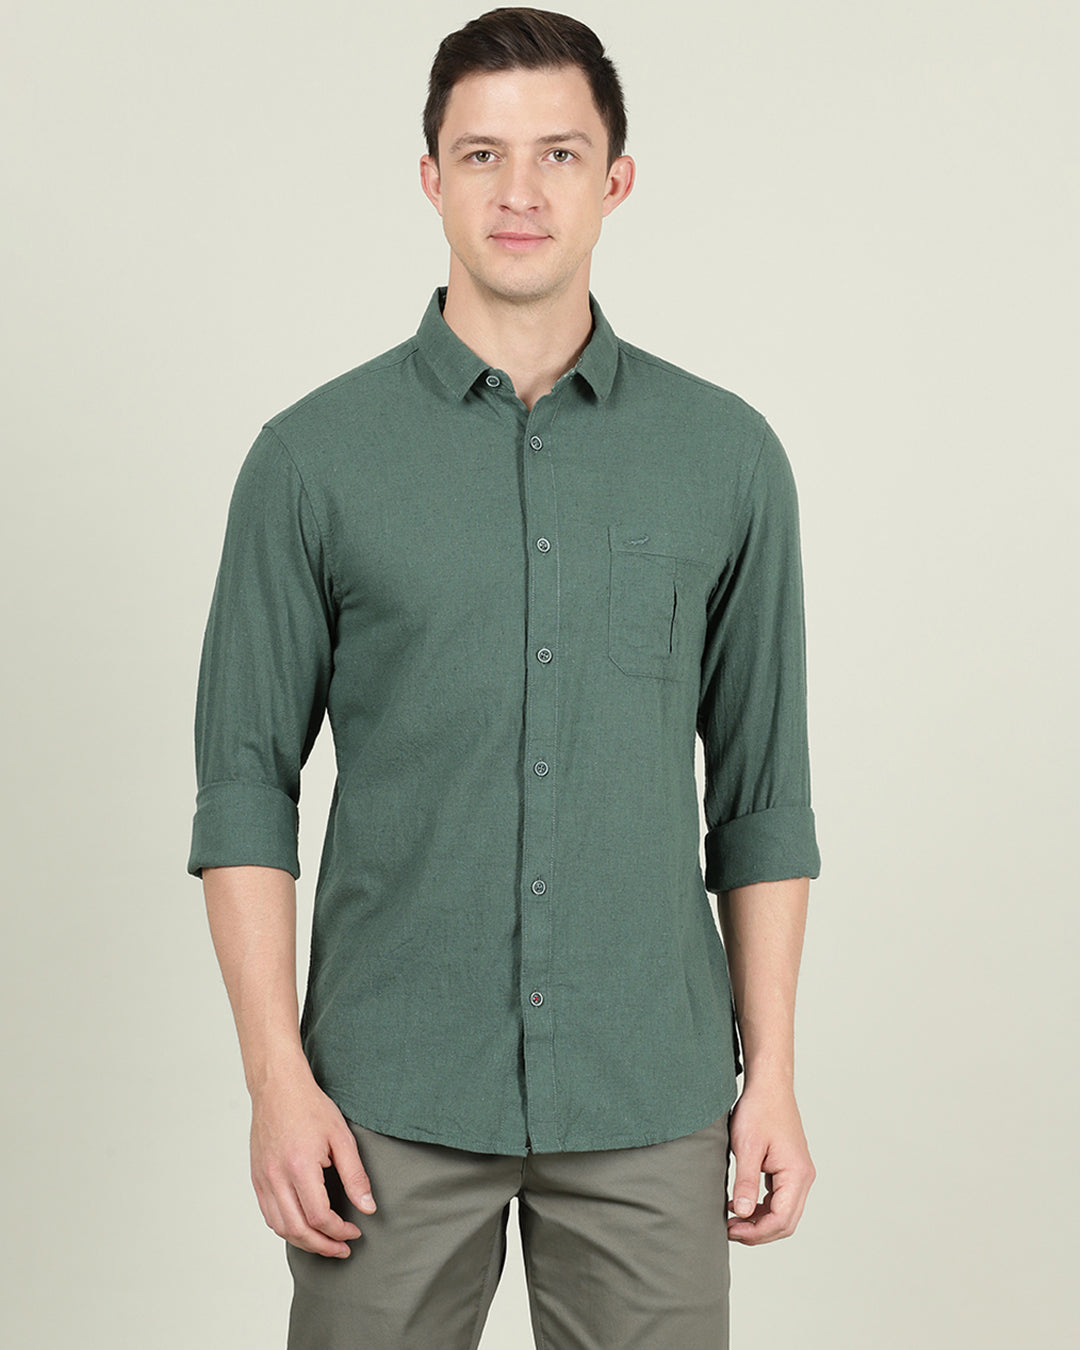 Crocodile Green Full Sleeve Collar Comfort Fit Shirt